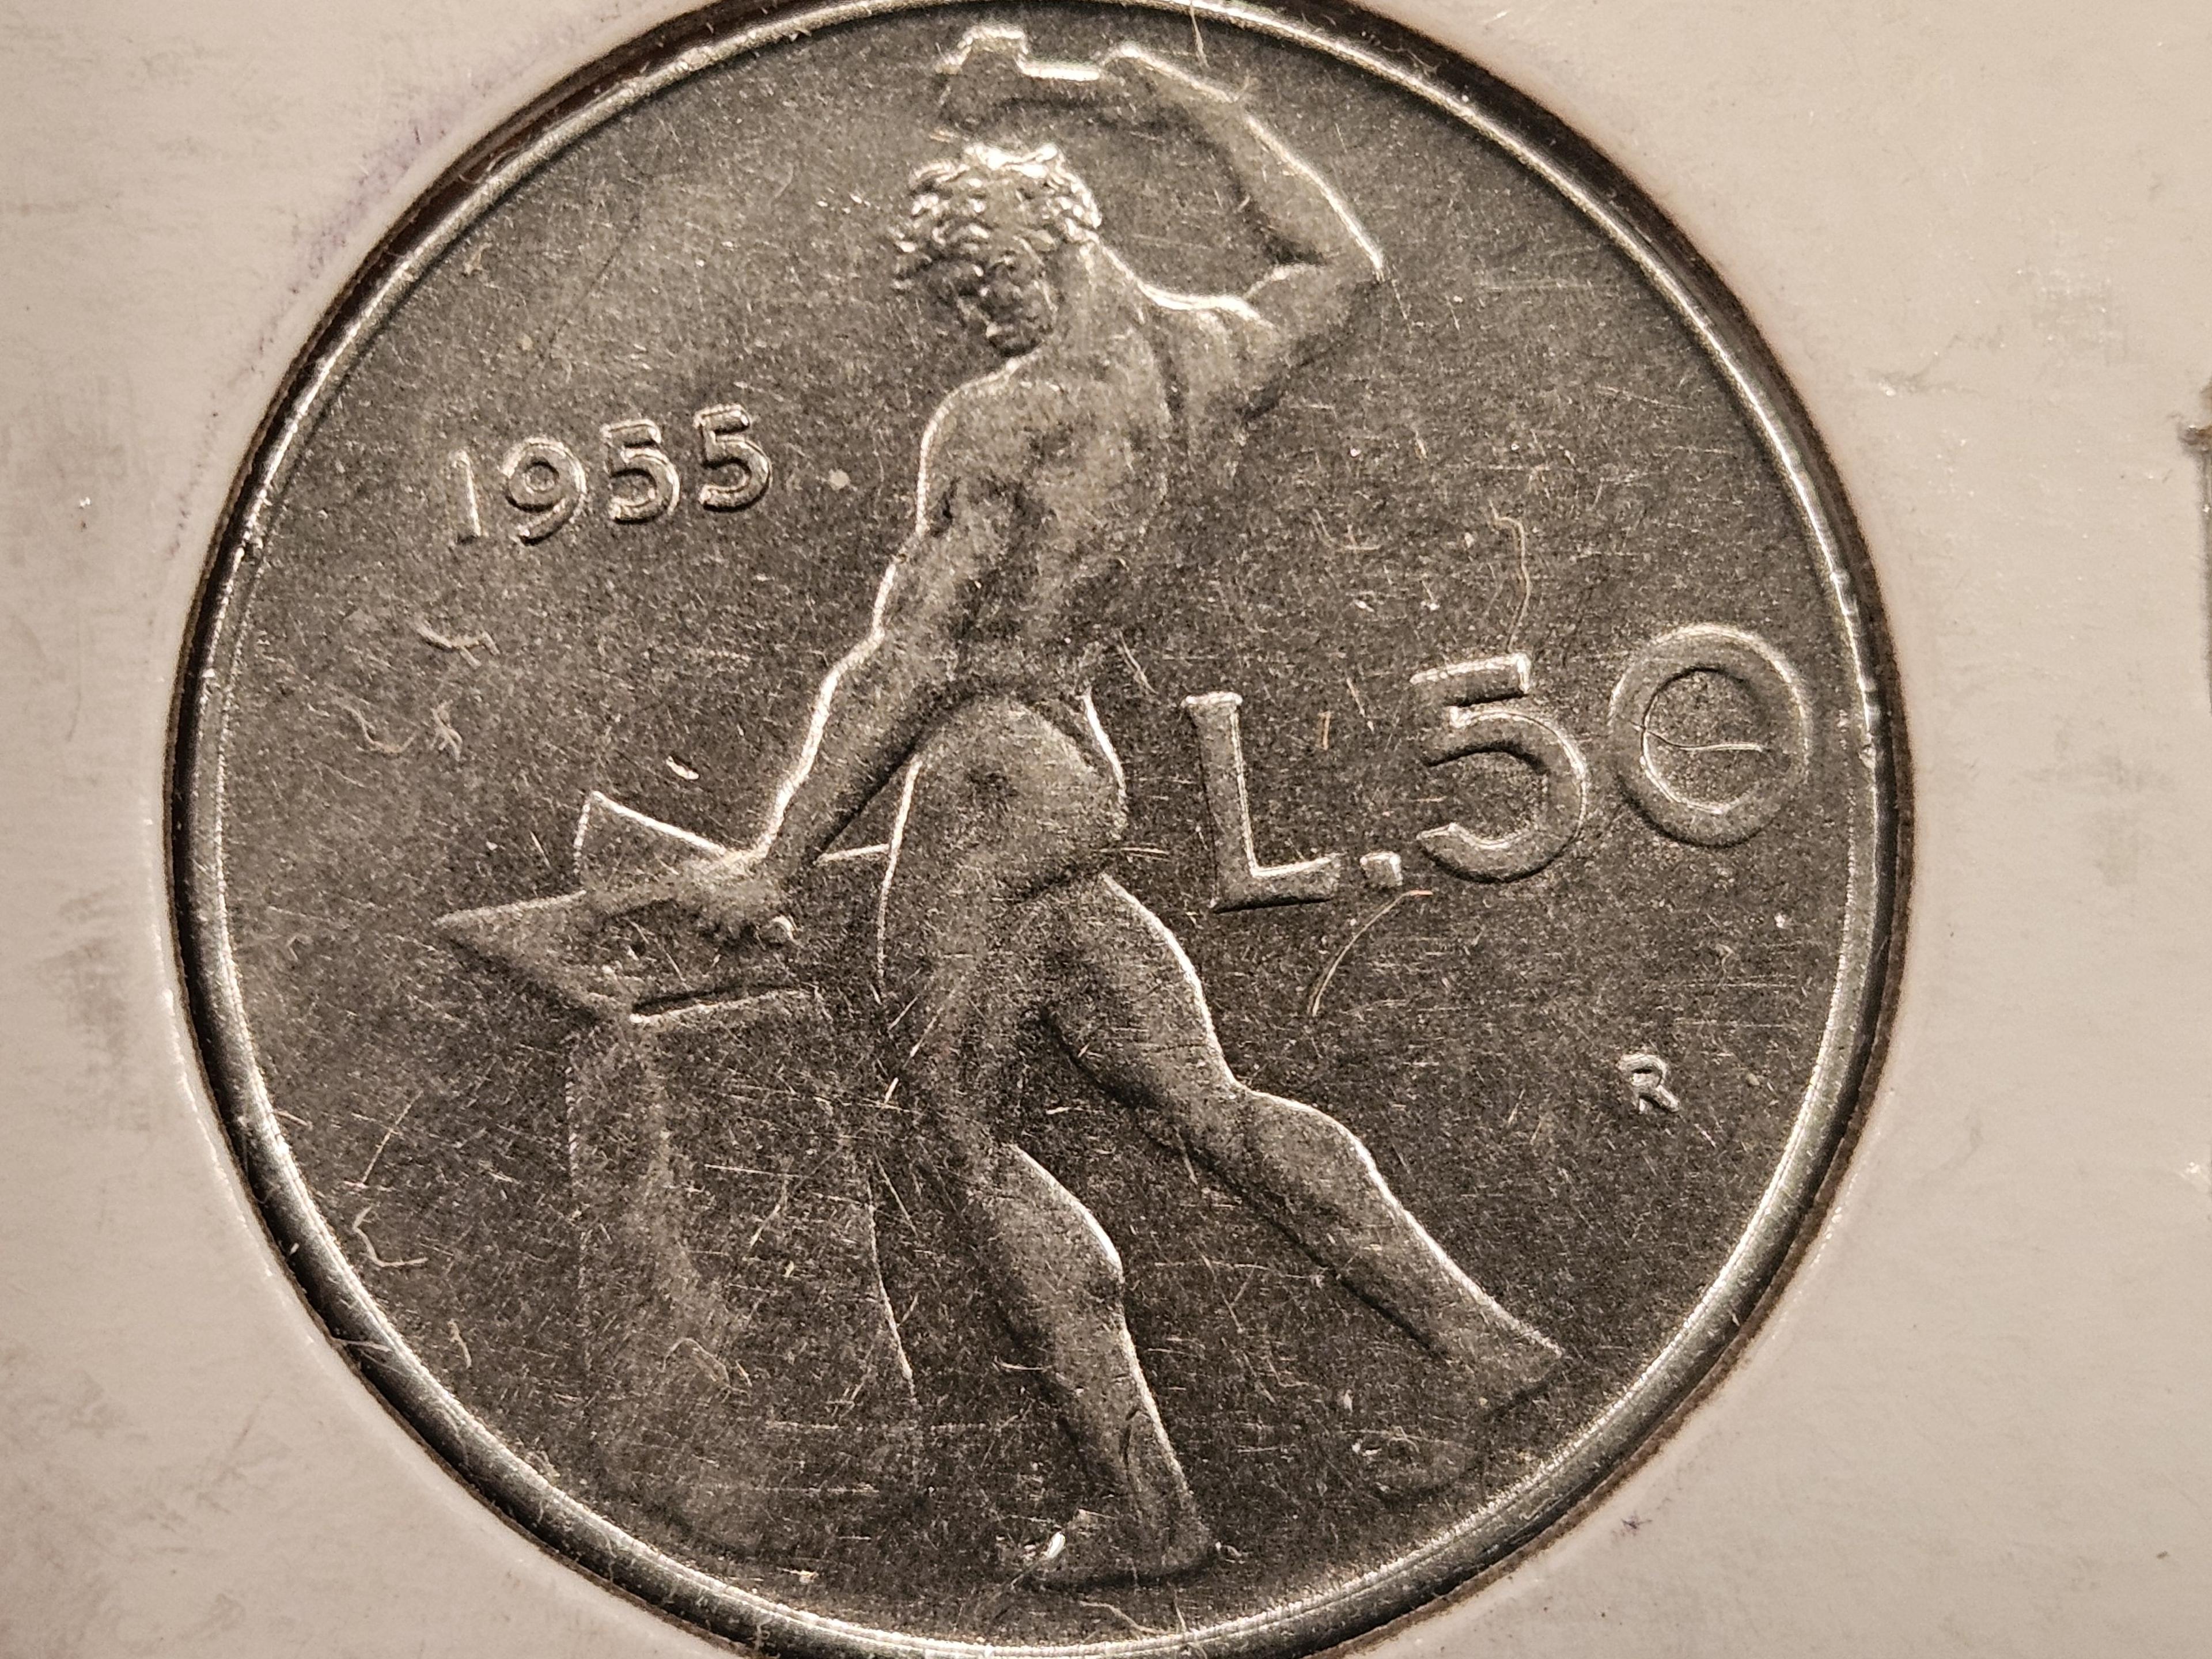 Brilliant Uncirculated 1955 Italy 20 lire